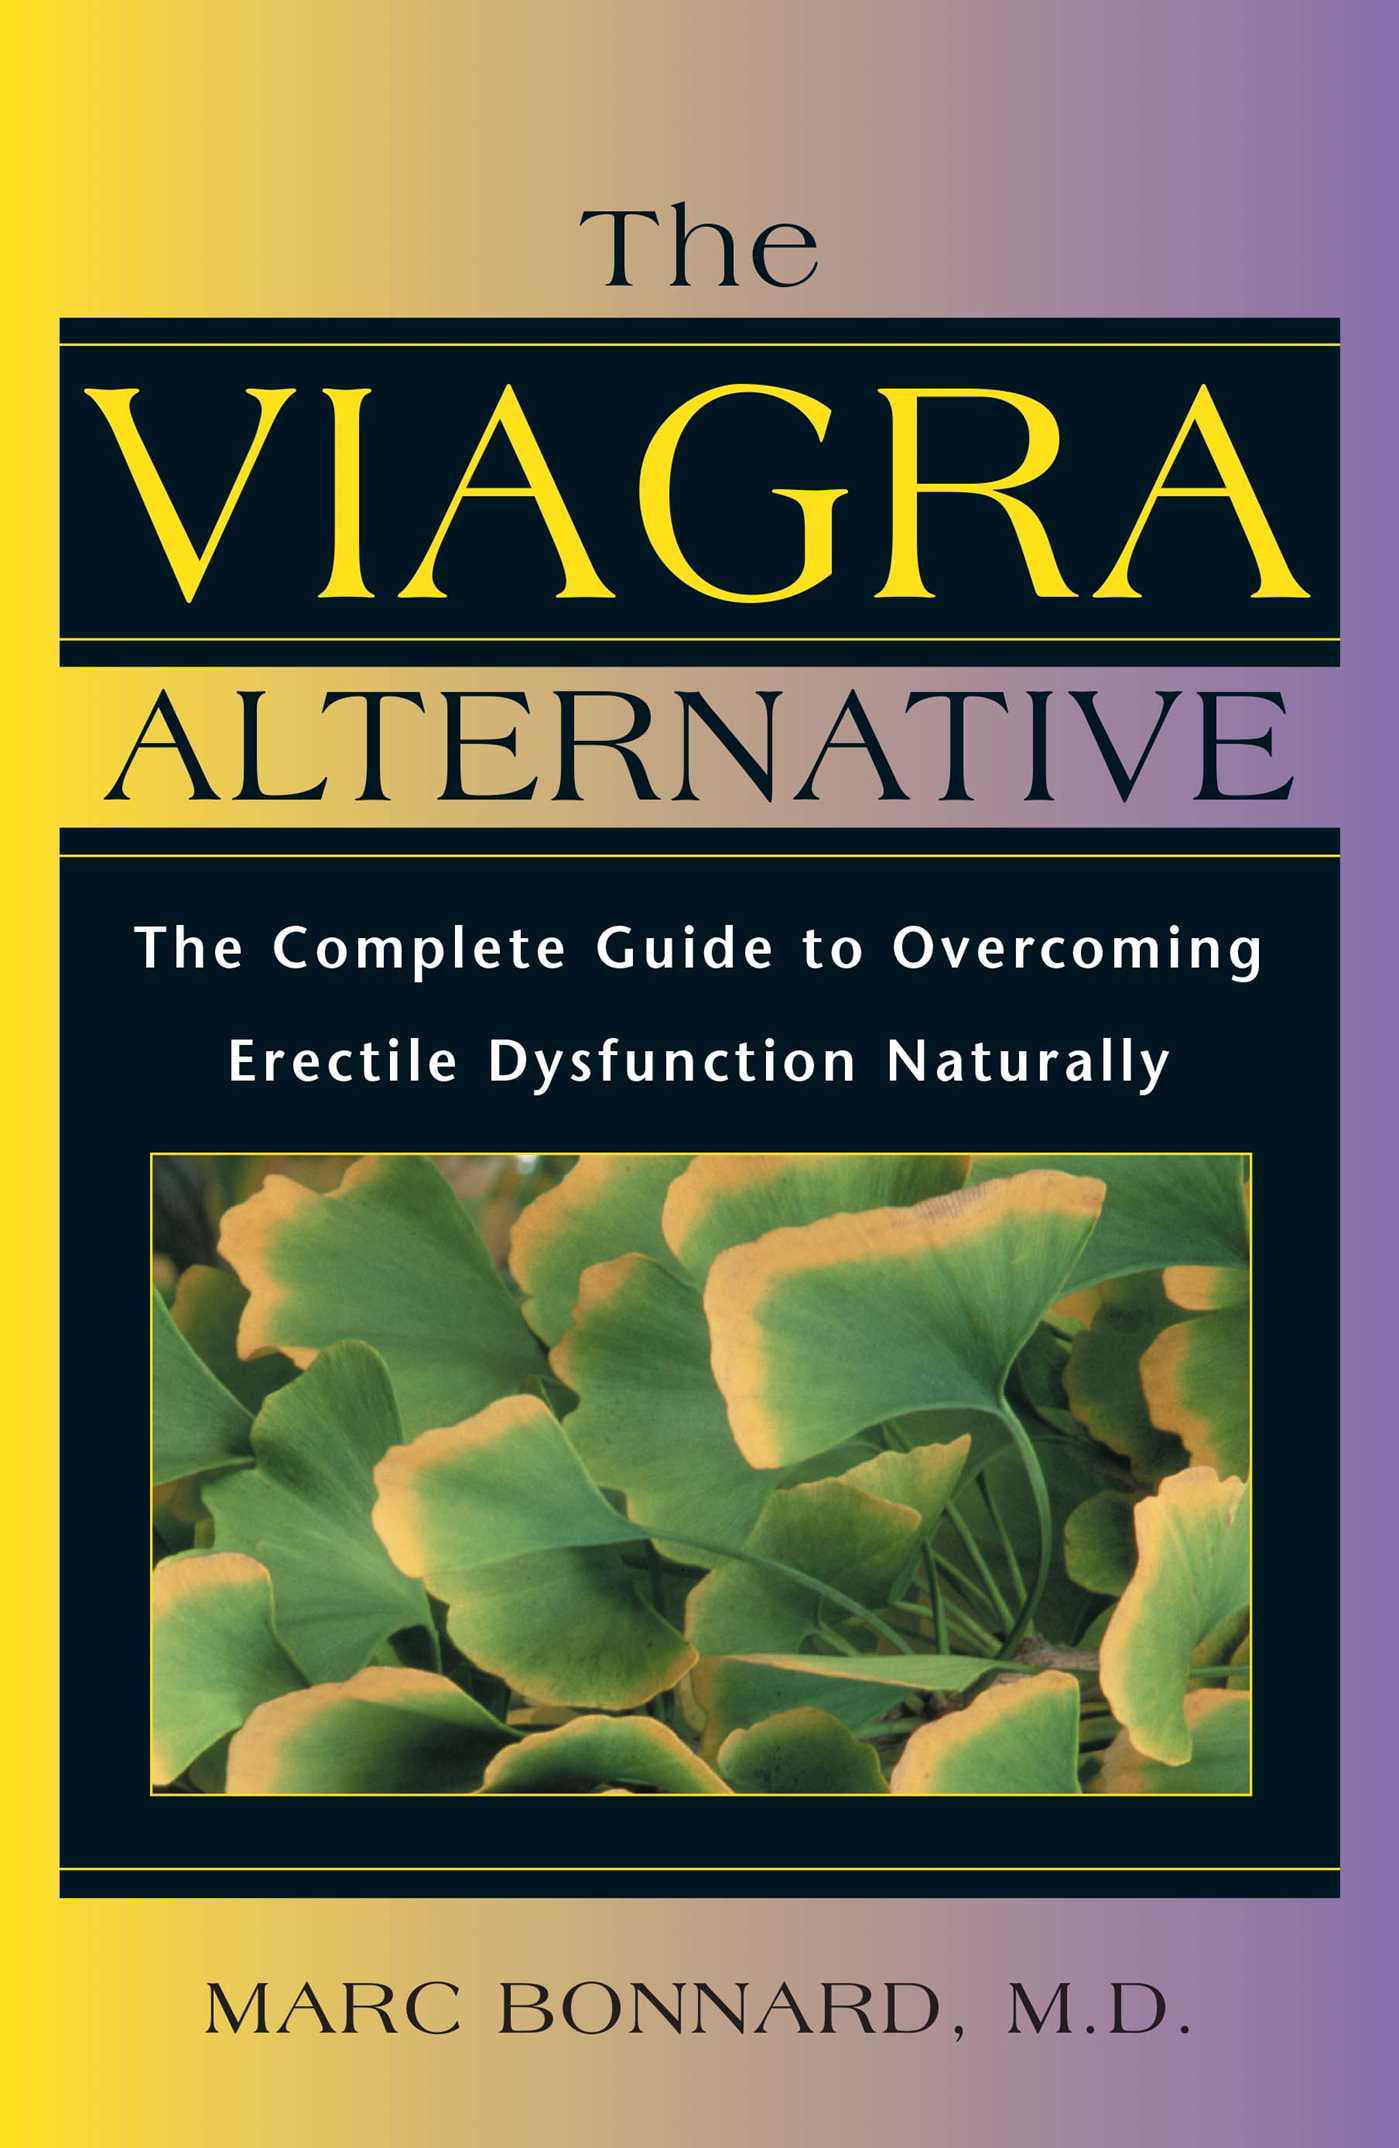 is viagra good for erectile dysfunction